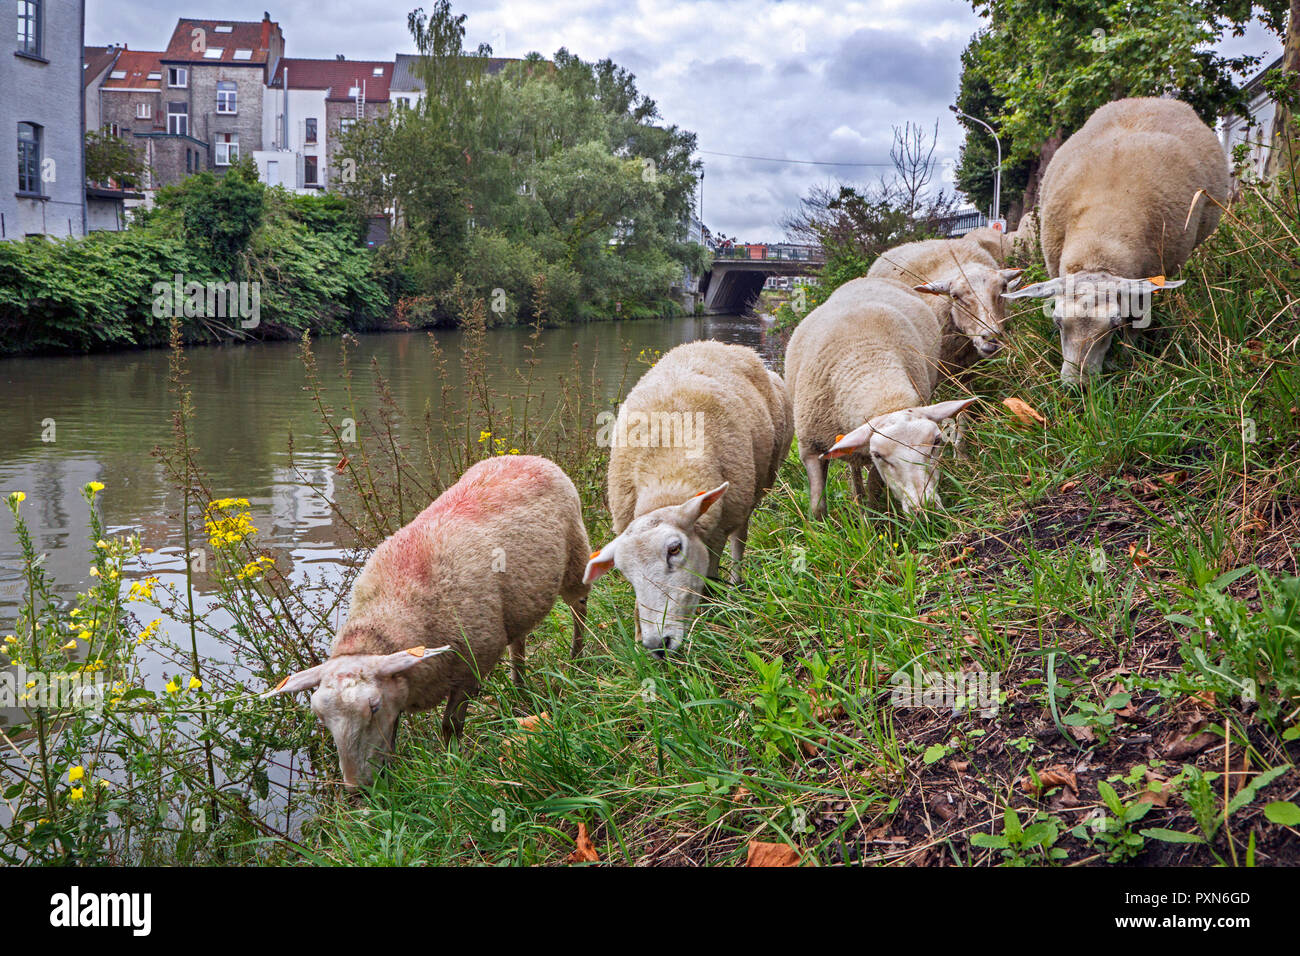 Herde Schafe grasen Gras entlang steiler Canal bank im Sommer in der Stadt Gent/Gent, Flandern, Belgien Stockfoto